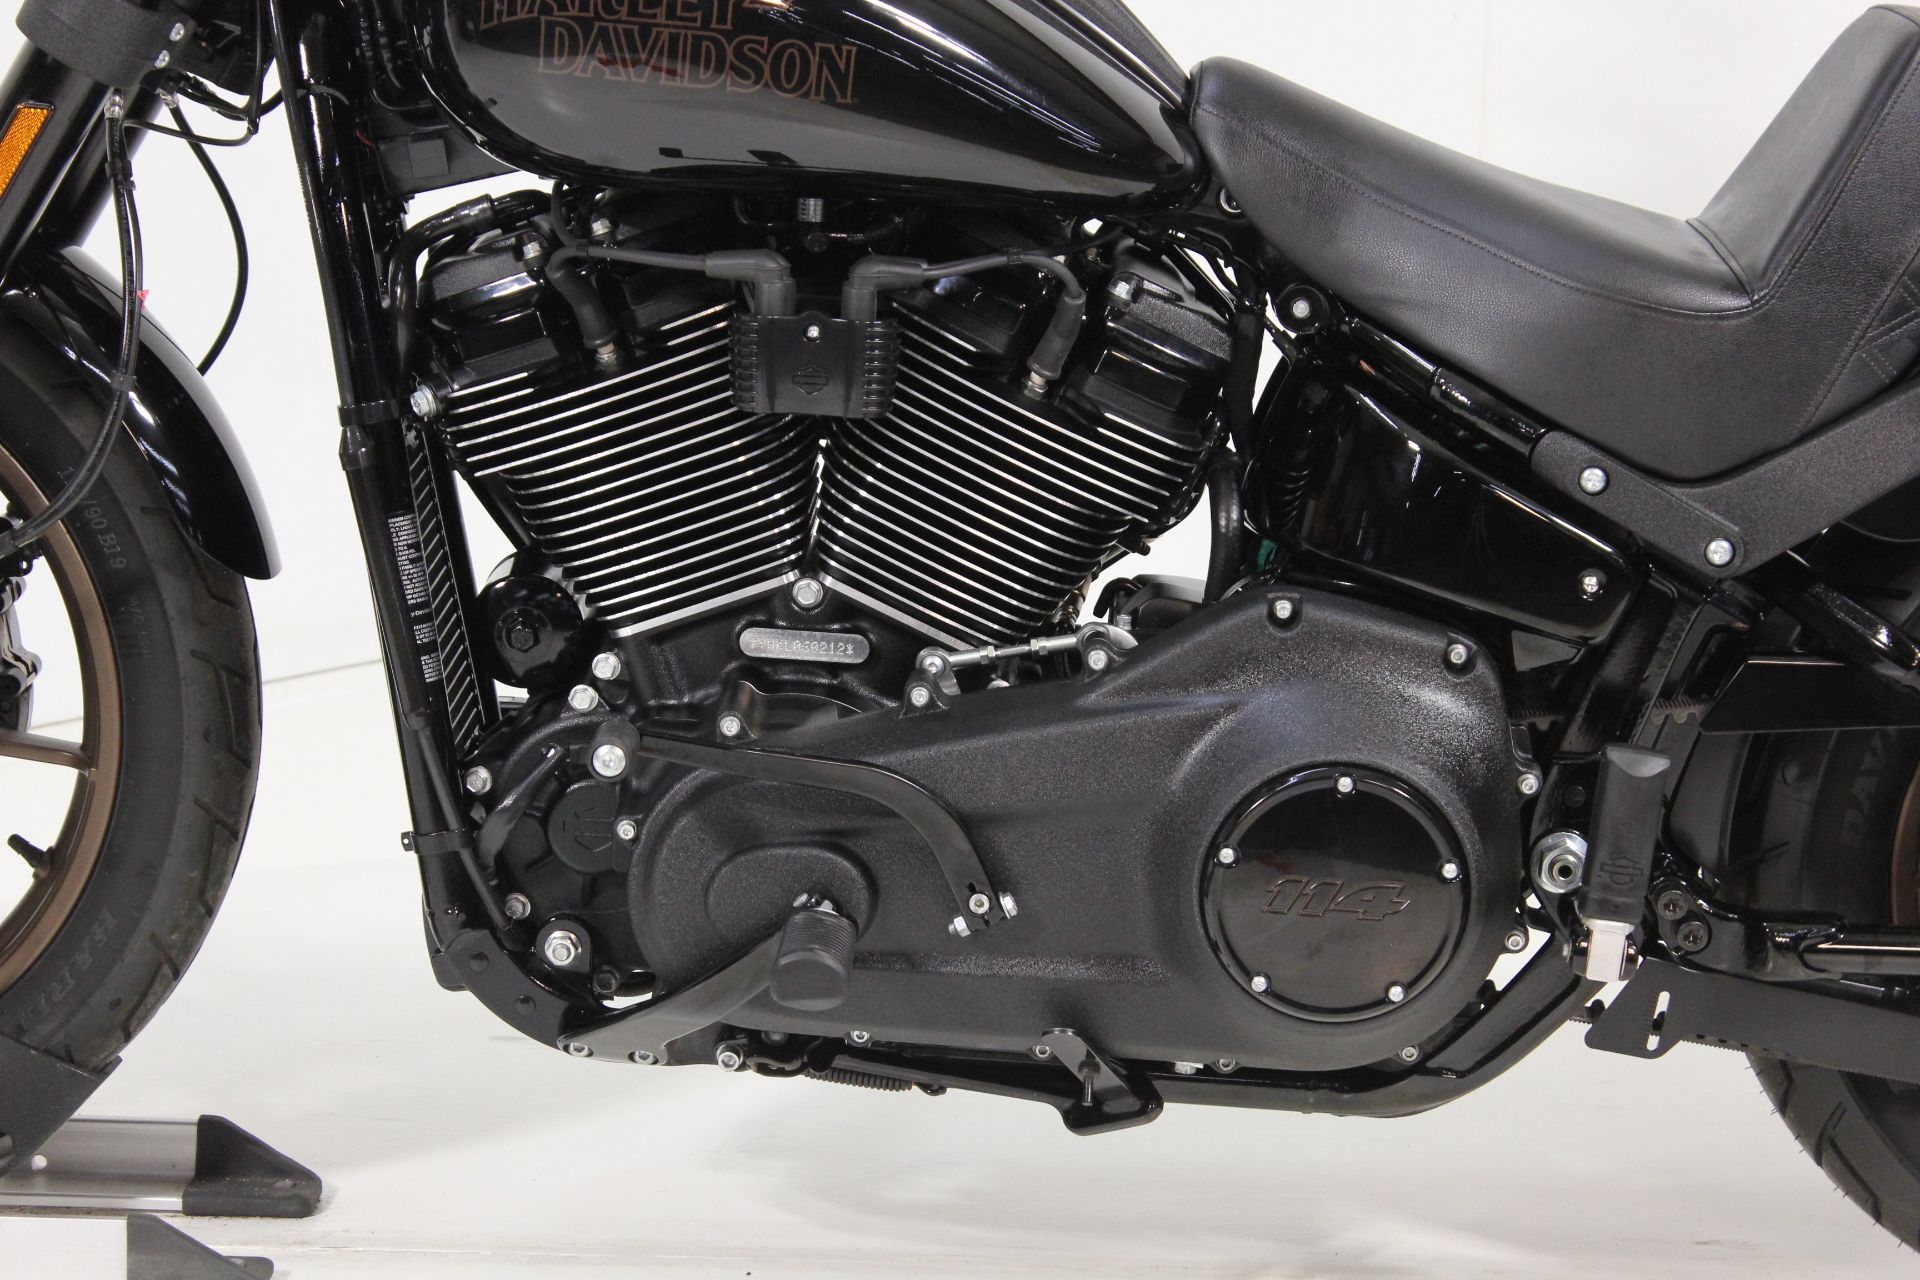 2020 Harley-Davidson Low Rider®S in Pittsfield, Massachusetts - Photo 15